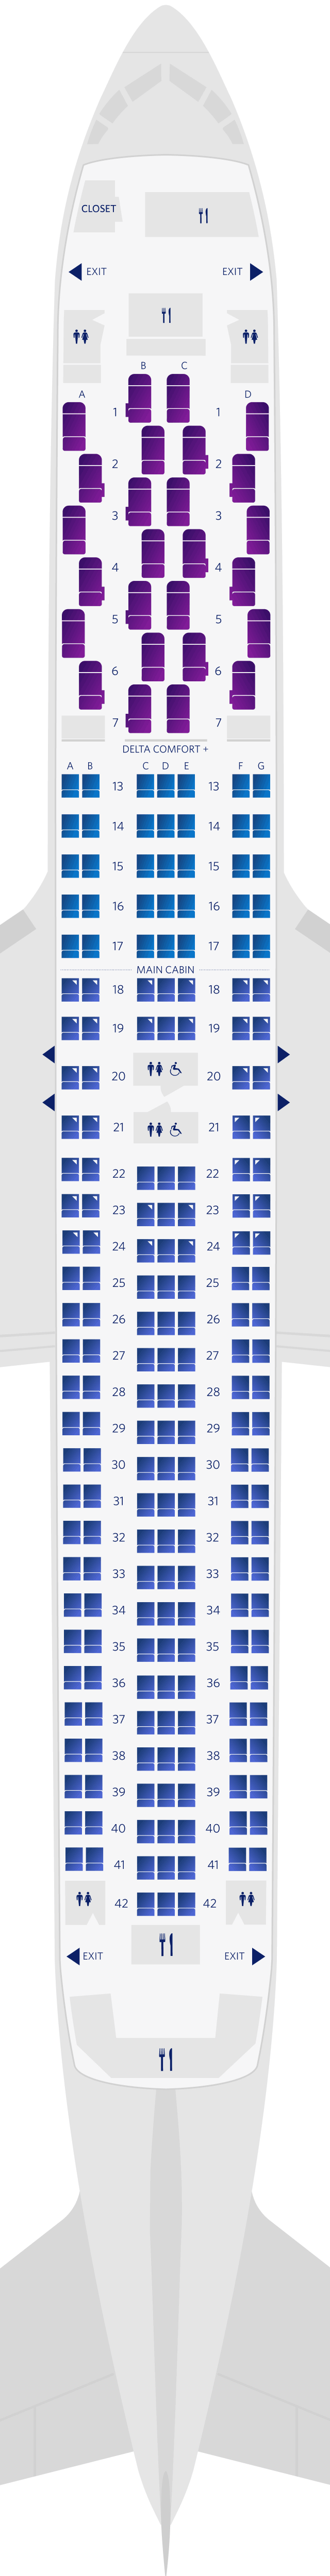 波音767-300ER（76Z）座位圖